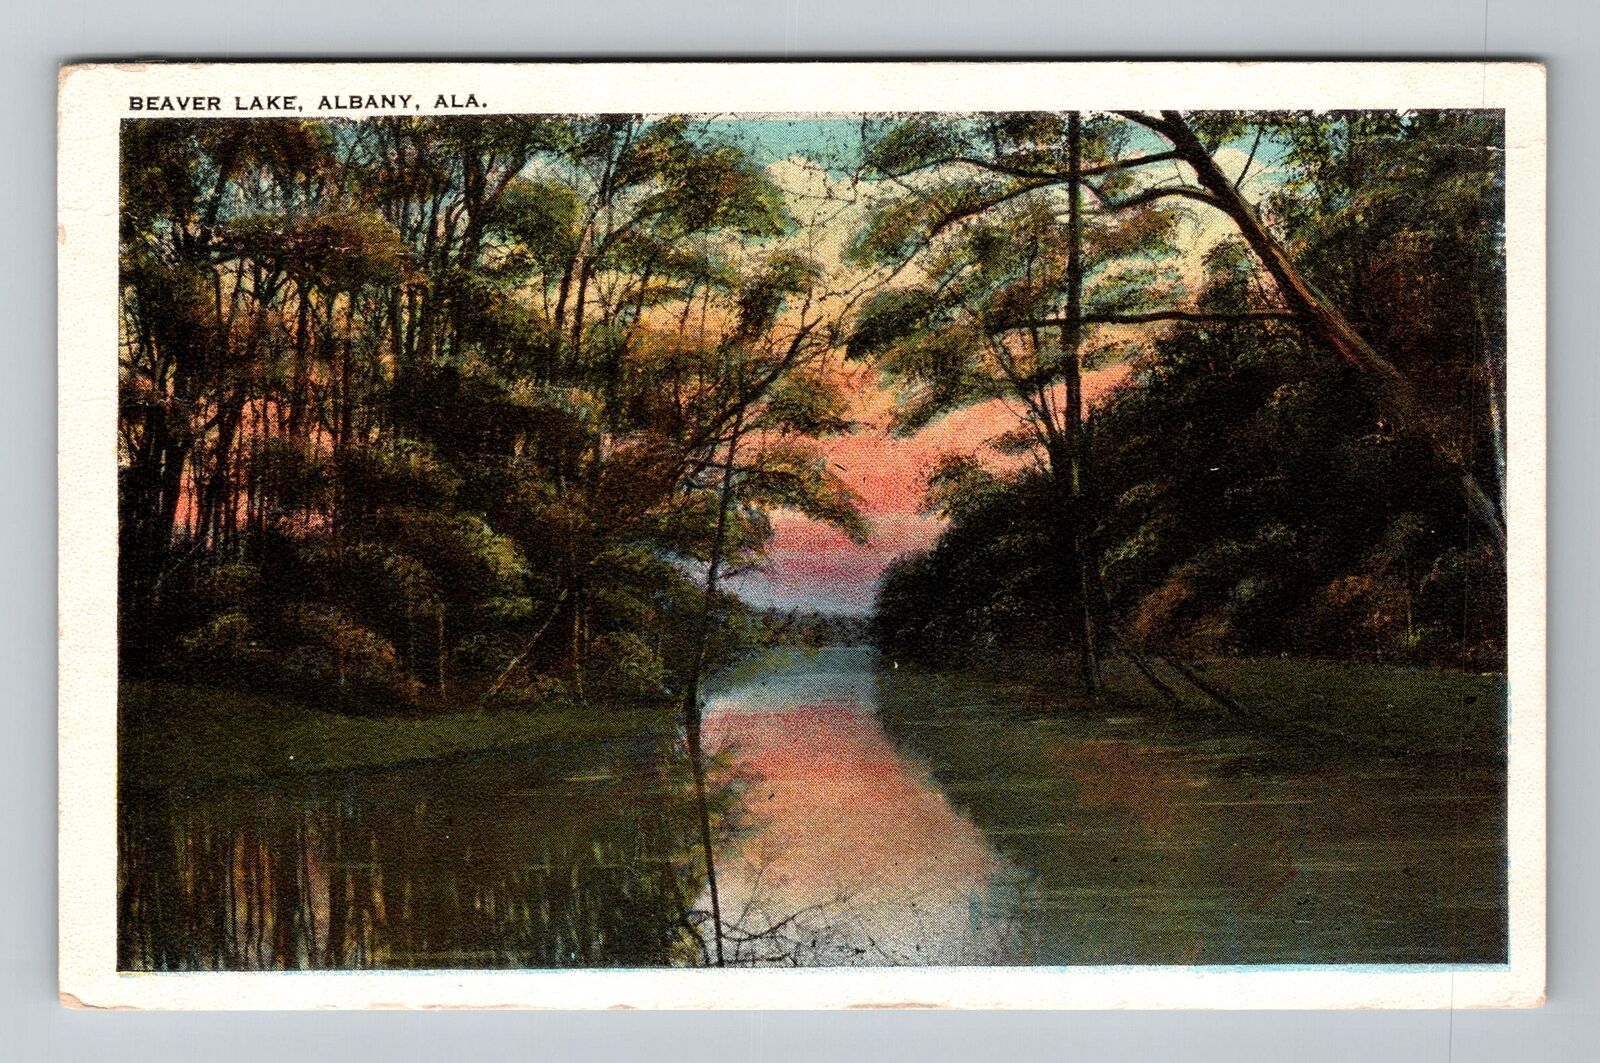 Albany AL-Alabama, Beaver Lake Vintage Souvenir Postcard